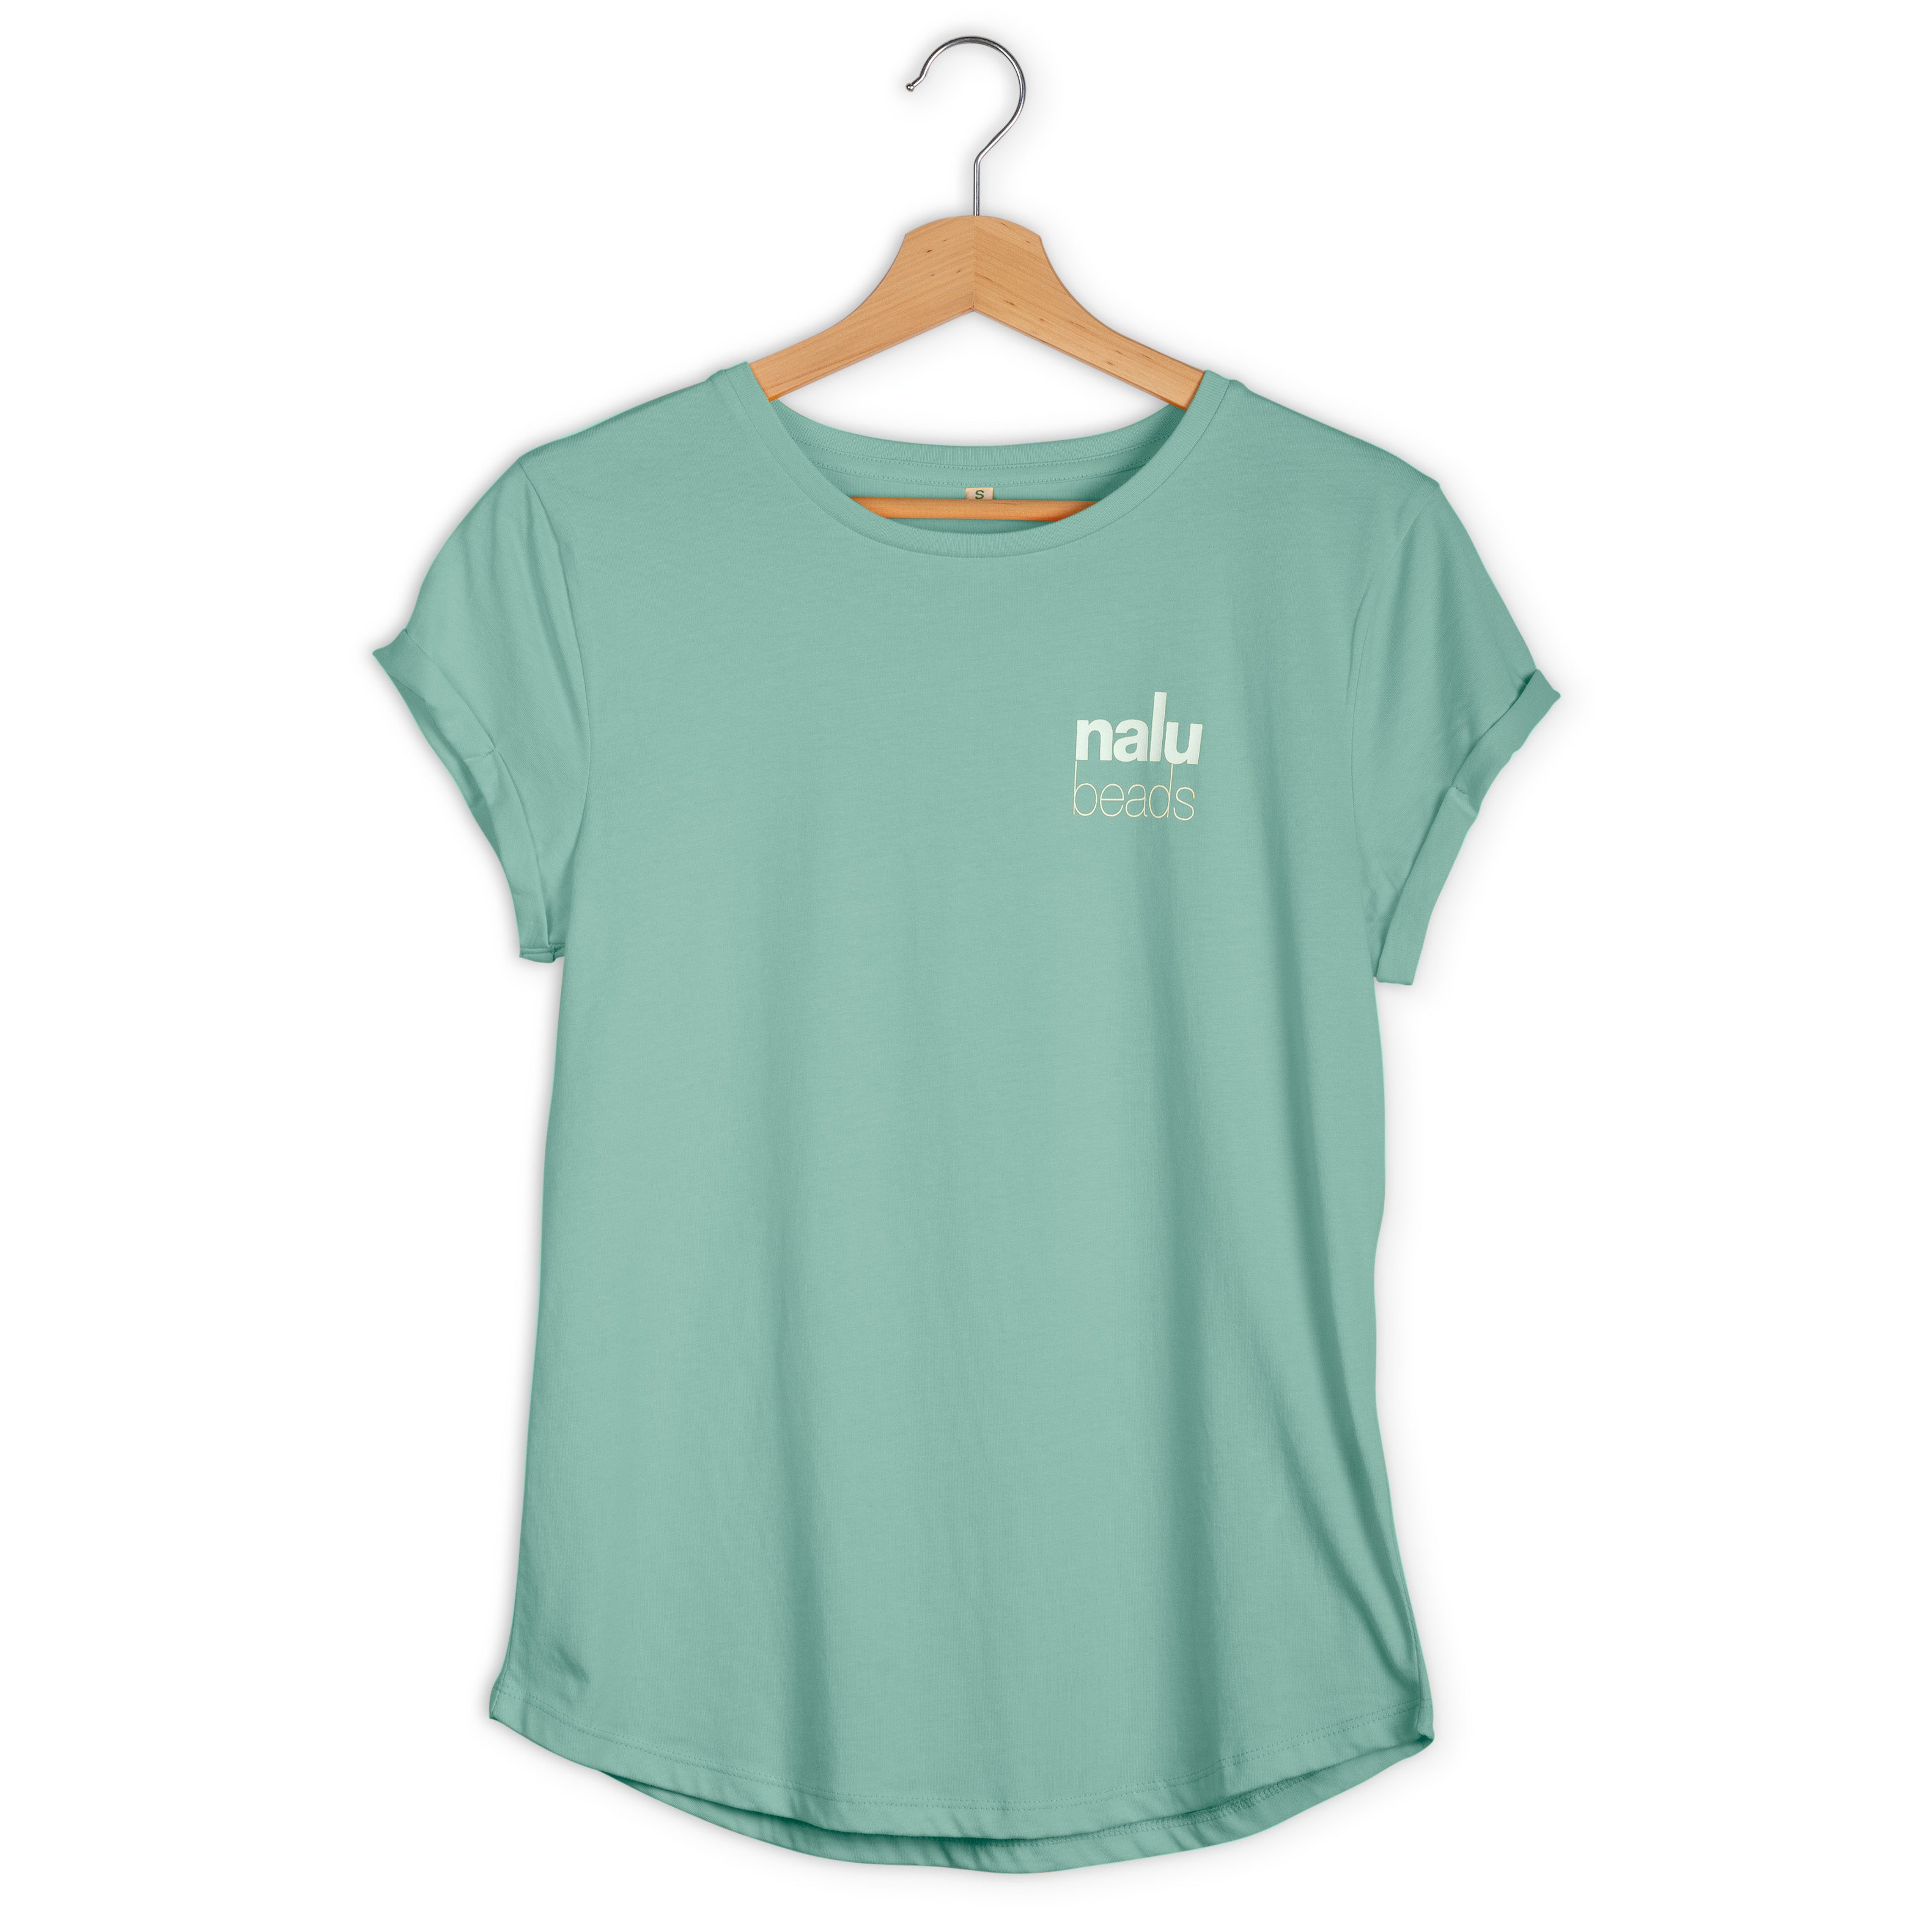 Nalu Ladies T Shirt Mint